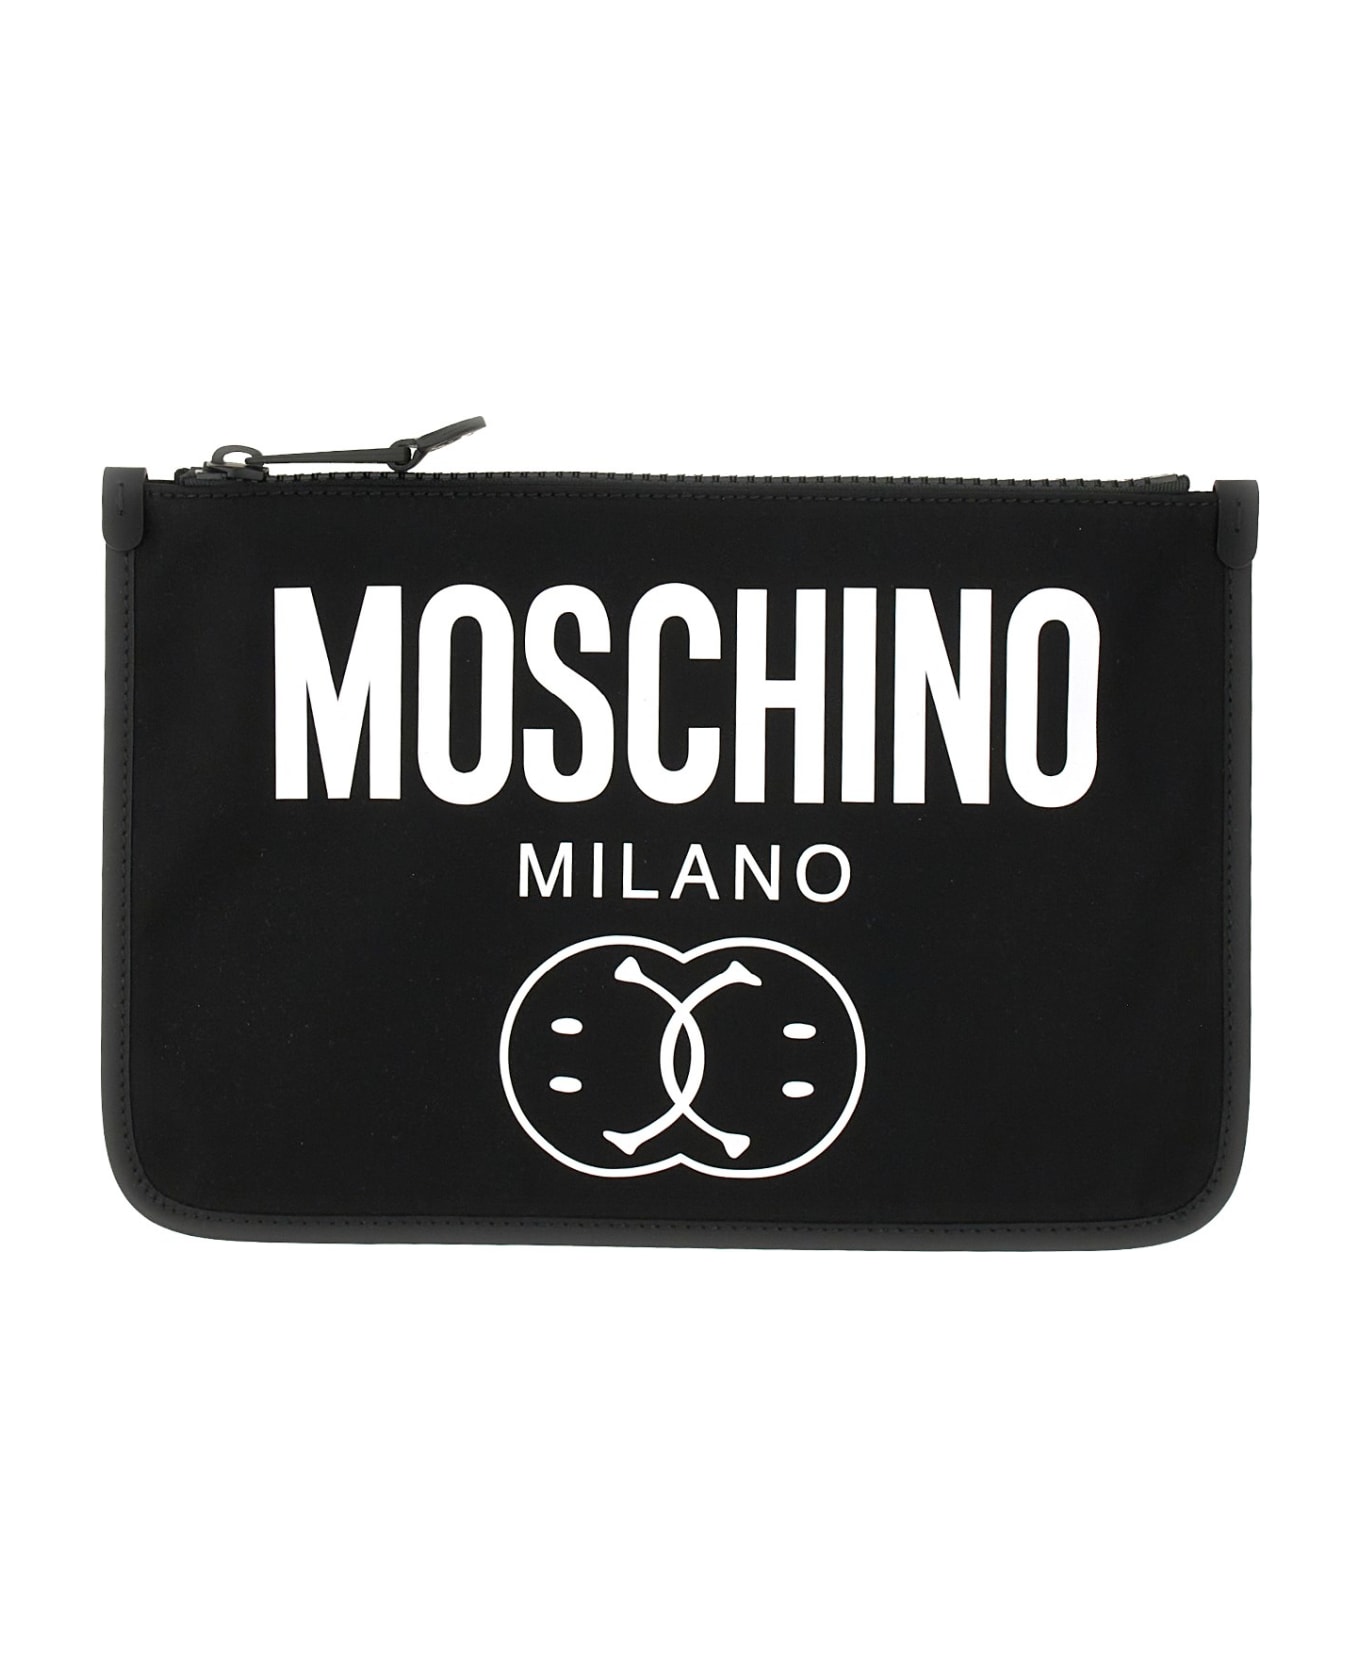 Moschino Clutch With Logo - NERO